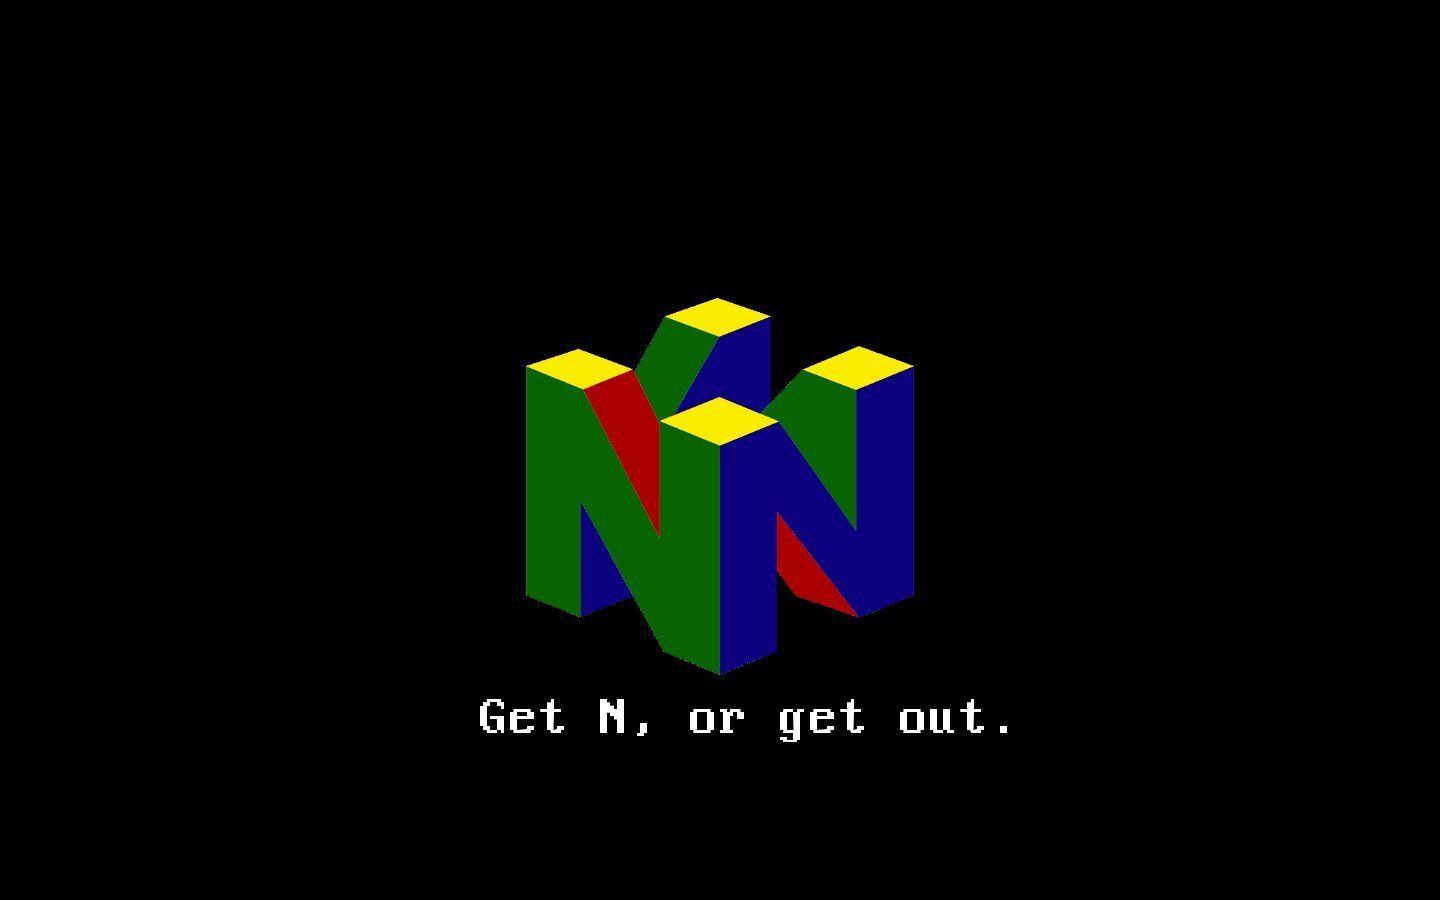 N64 Wallpaper Logo by wizkid49 on DeviantArt